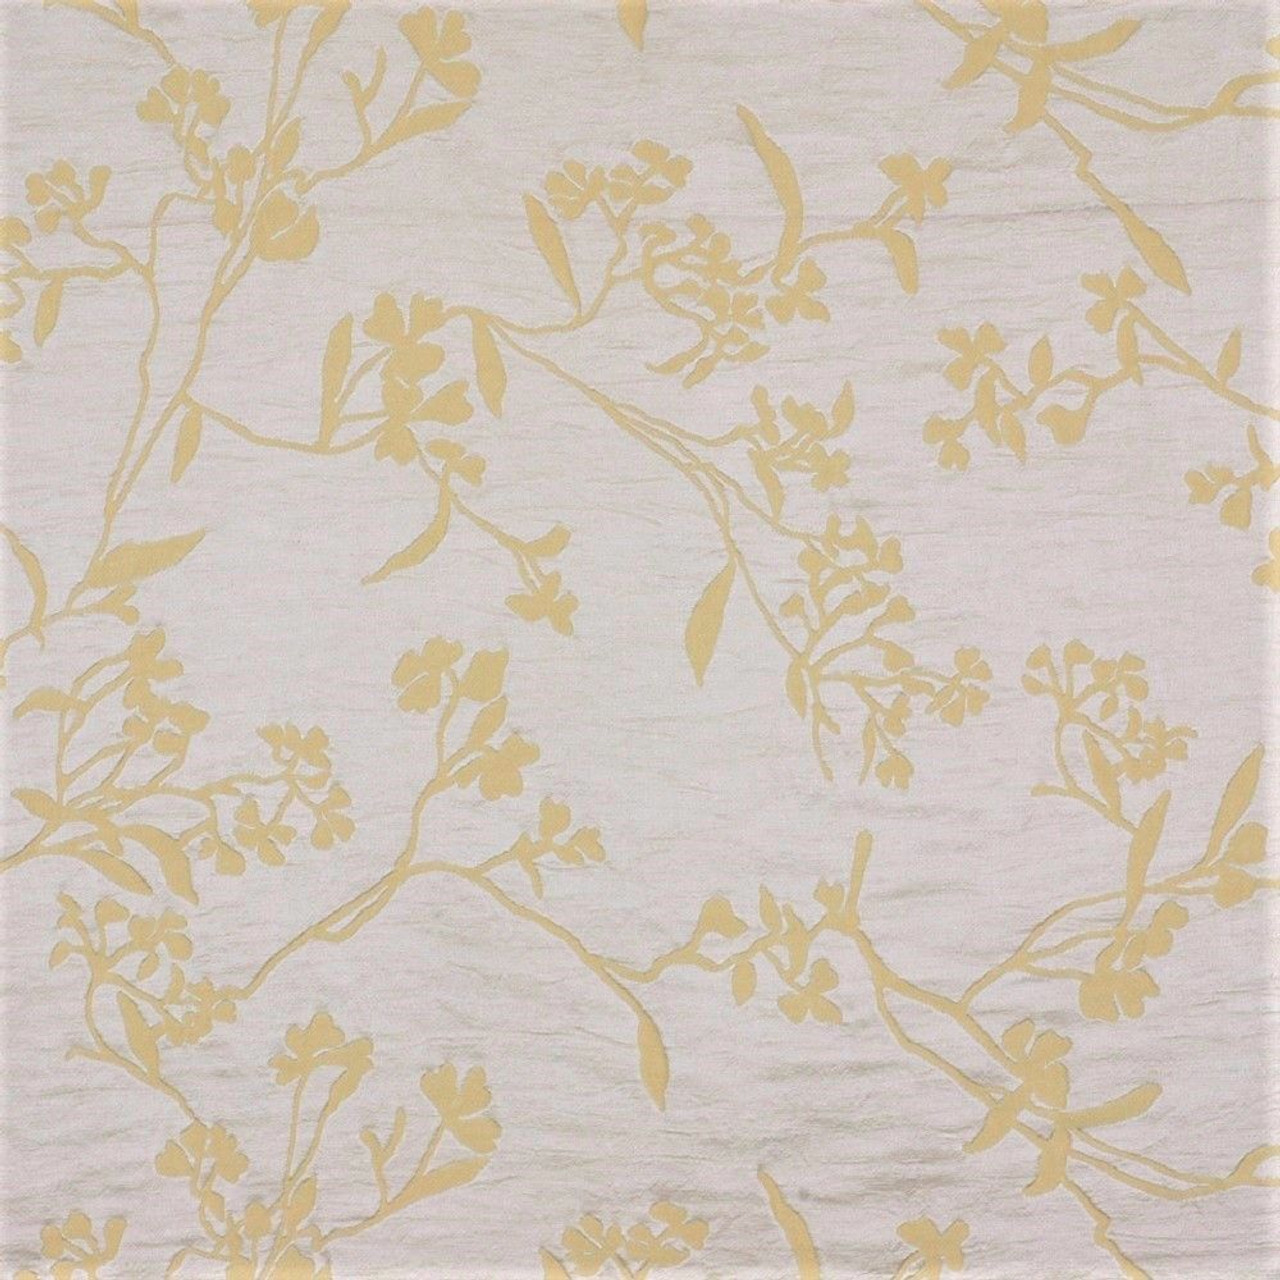 Fabric Robert Allen Beacon Hill Thale Cress Yellow Lotus Embroidery Silk II15